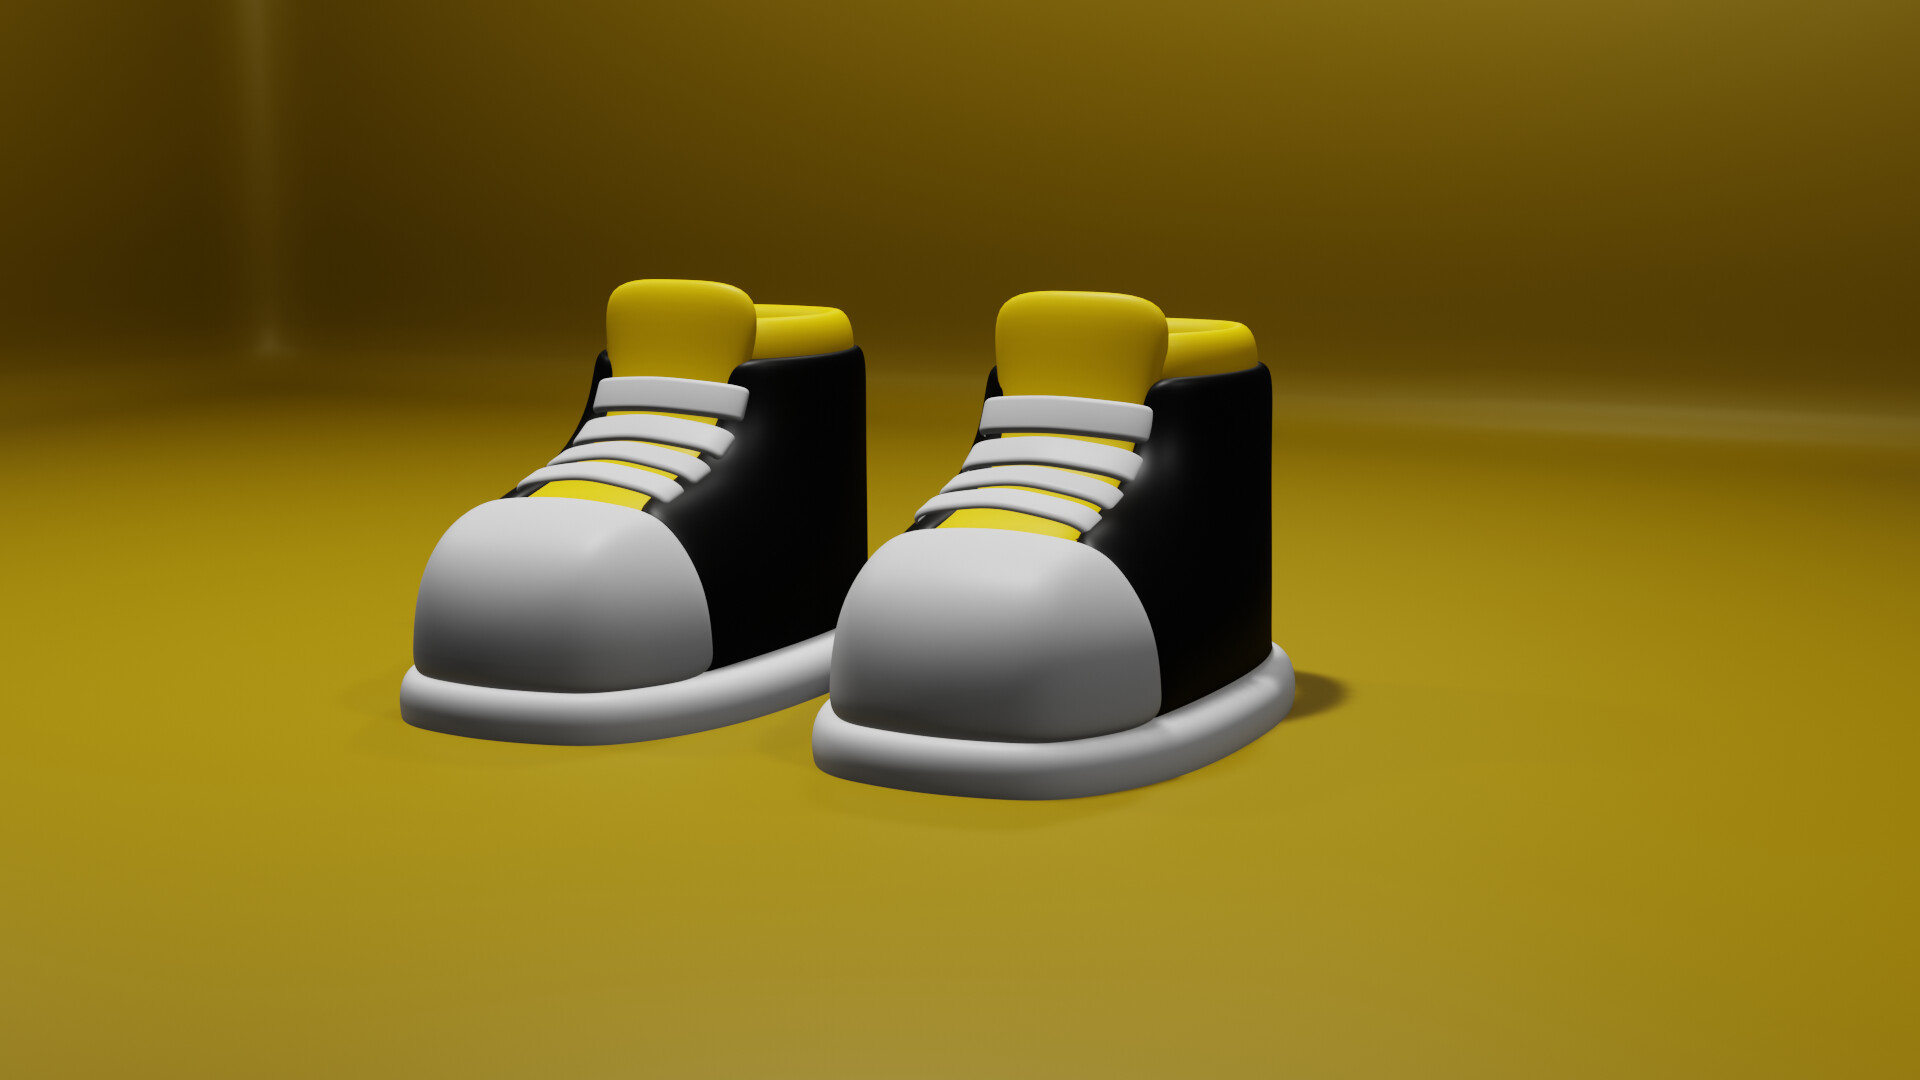 Blender Severo - Simple Stylised Shoe Study